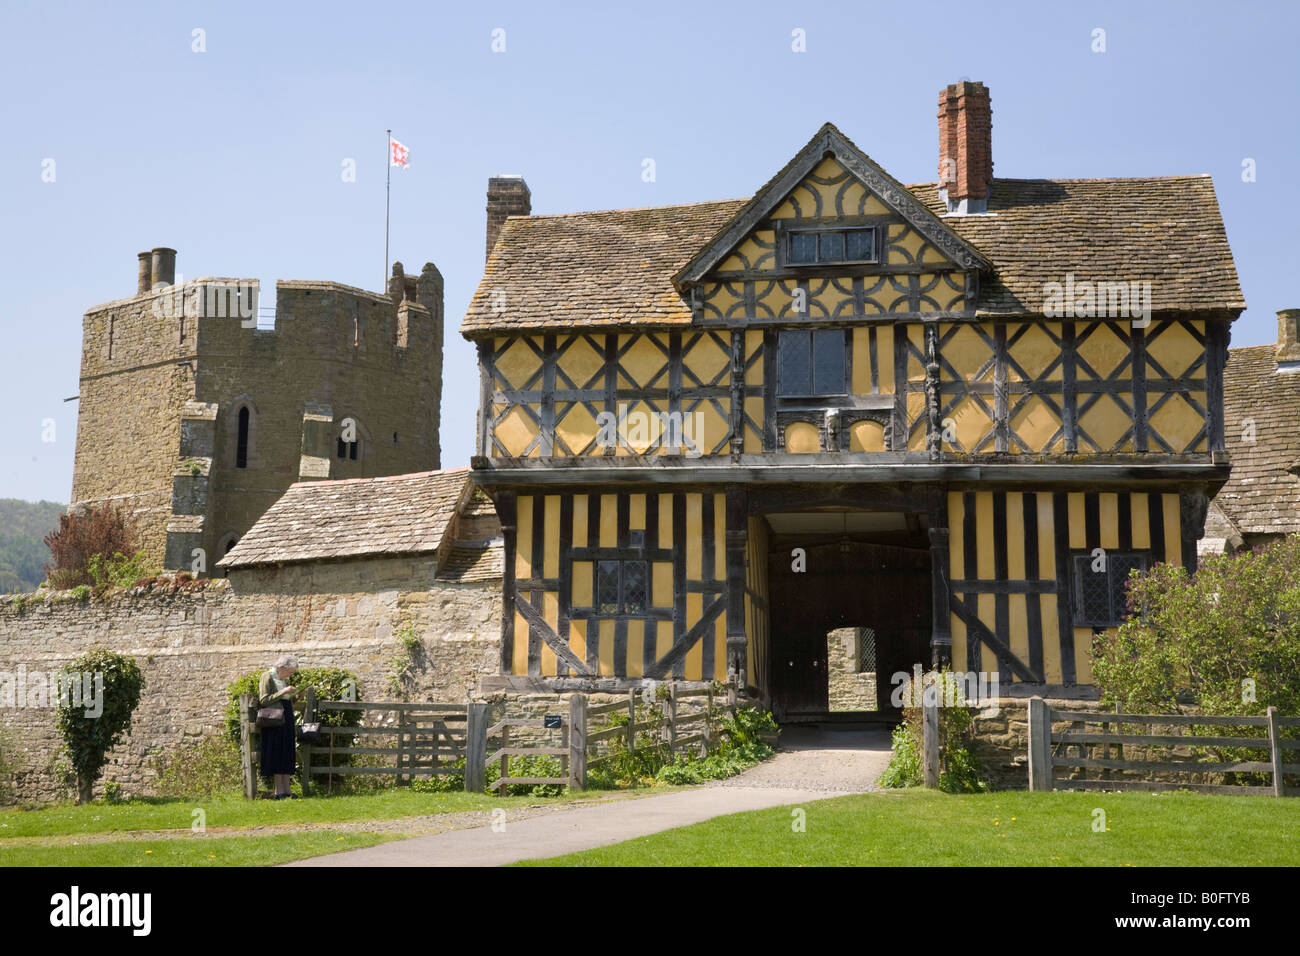 Stokesay Schloss aus dem 13. Jahrhundert befestigtes Herrenhaus aus dem 17. Jahrhundert Holz gerahmt Torhaus. Craven Arms Shropshire West Midlands England Großbritannien Stockfoto